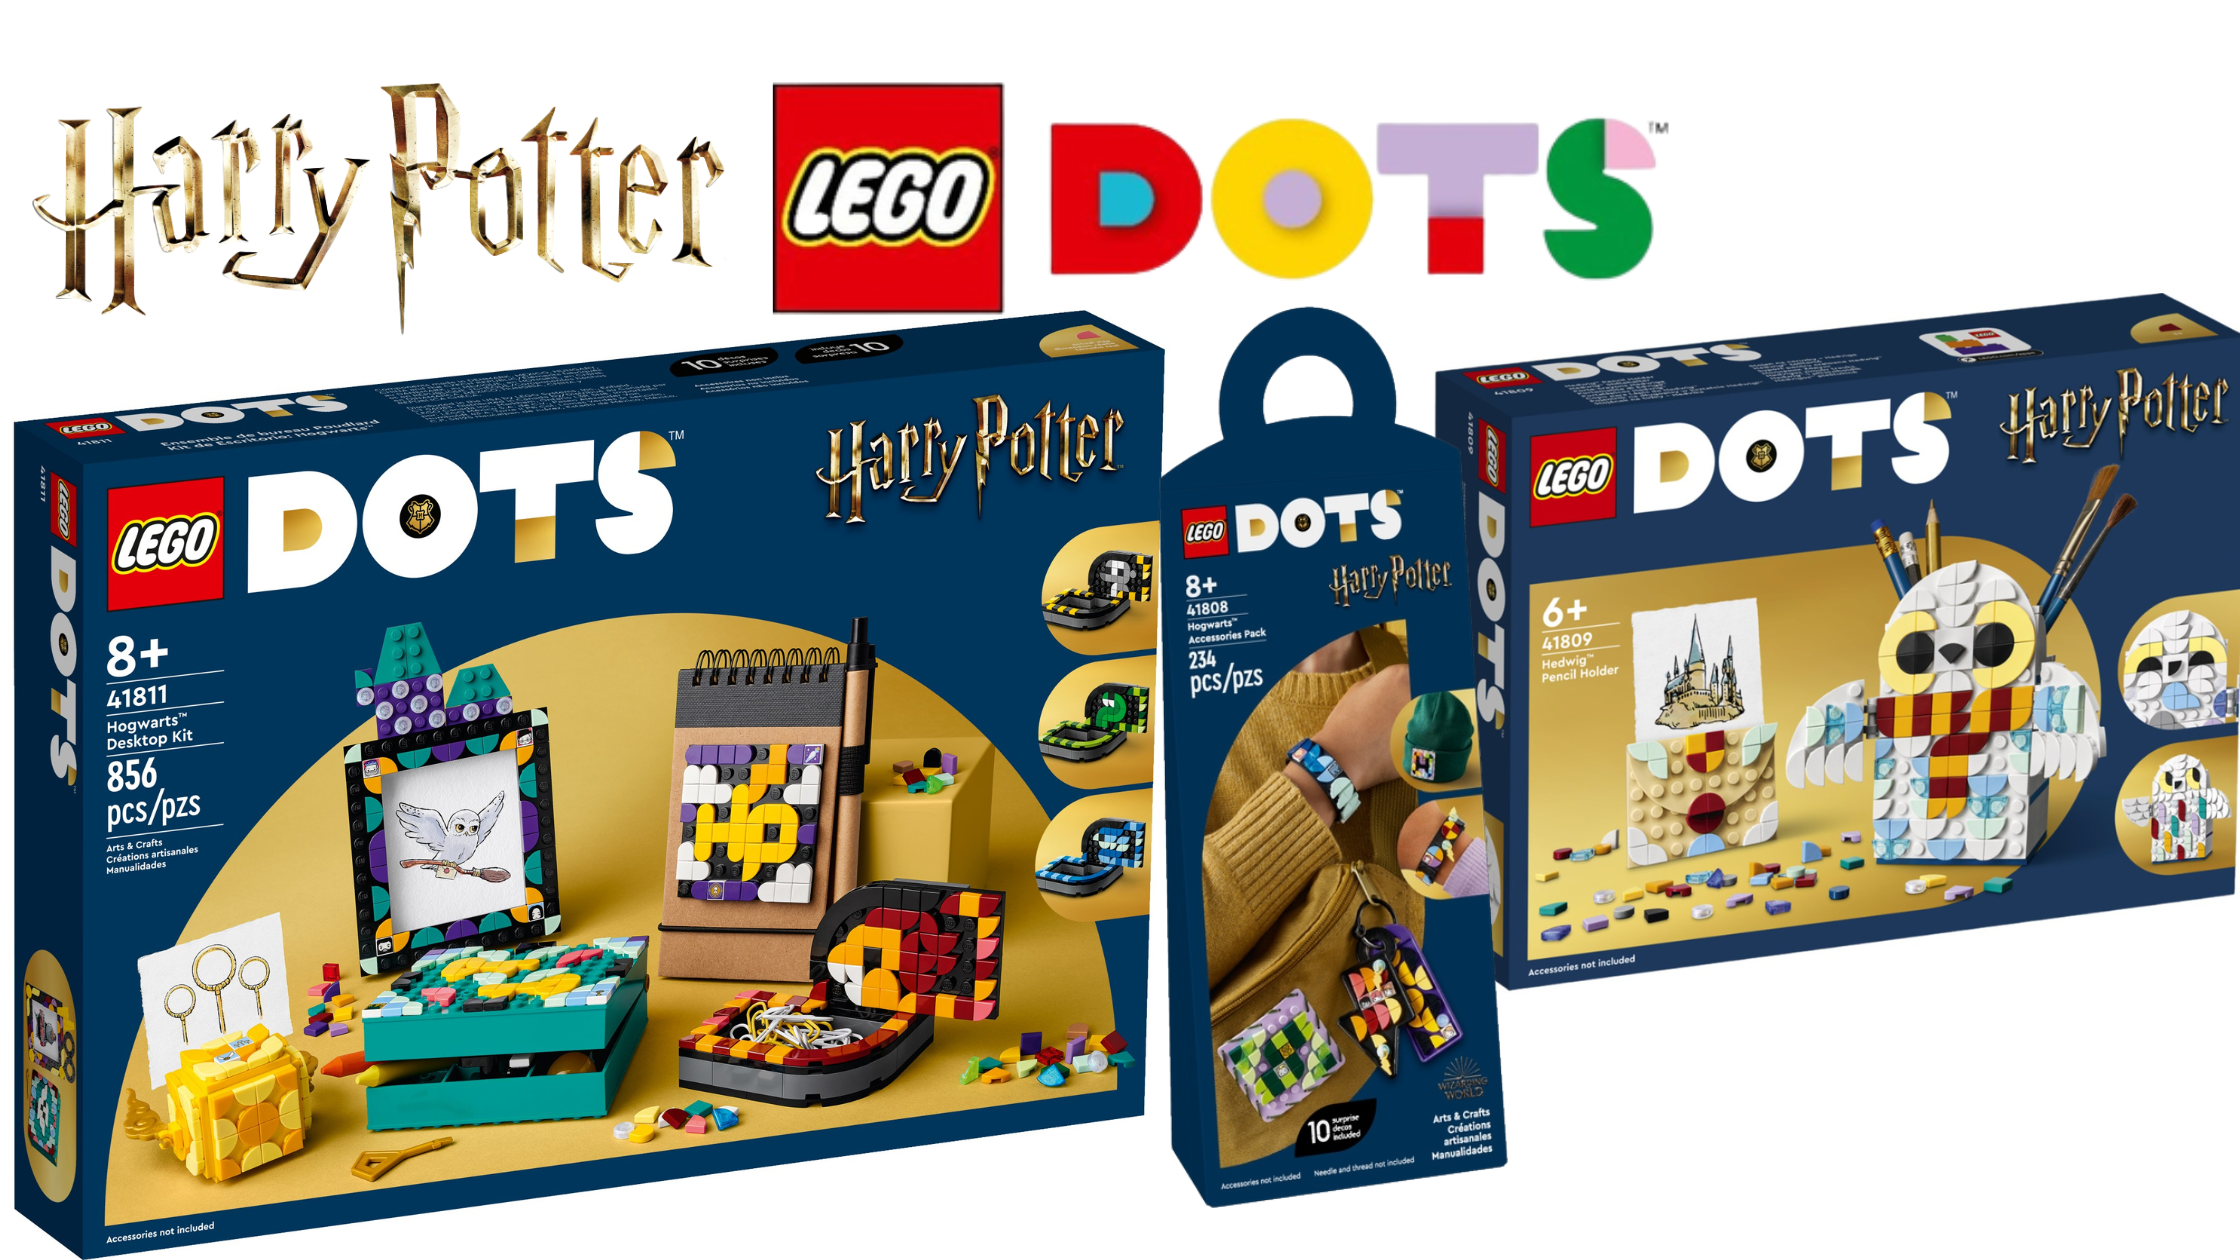 Full lineup of Harry Potter LEGO Dots sets revealed! - Jay's Brick Blog